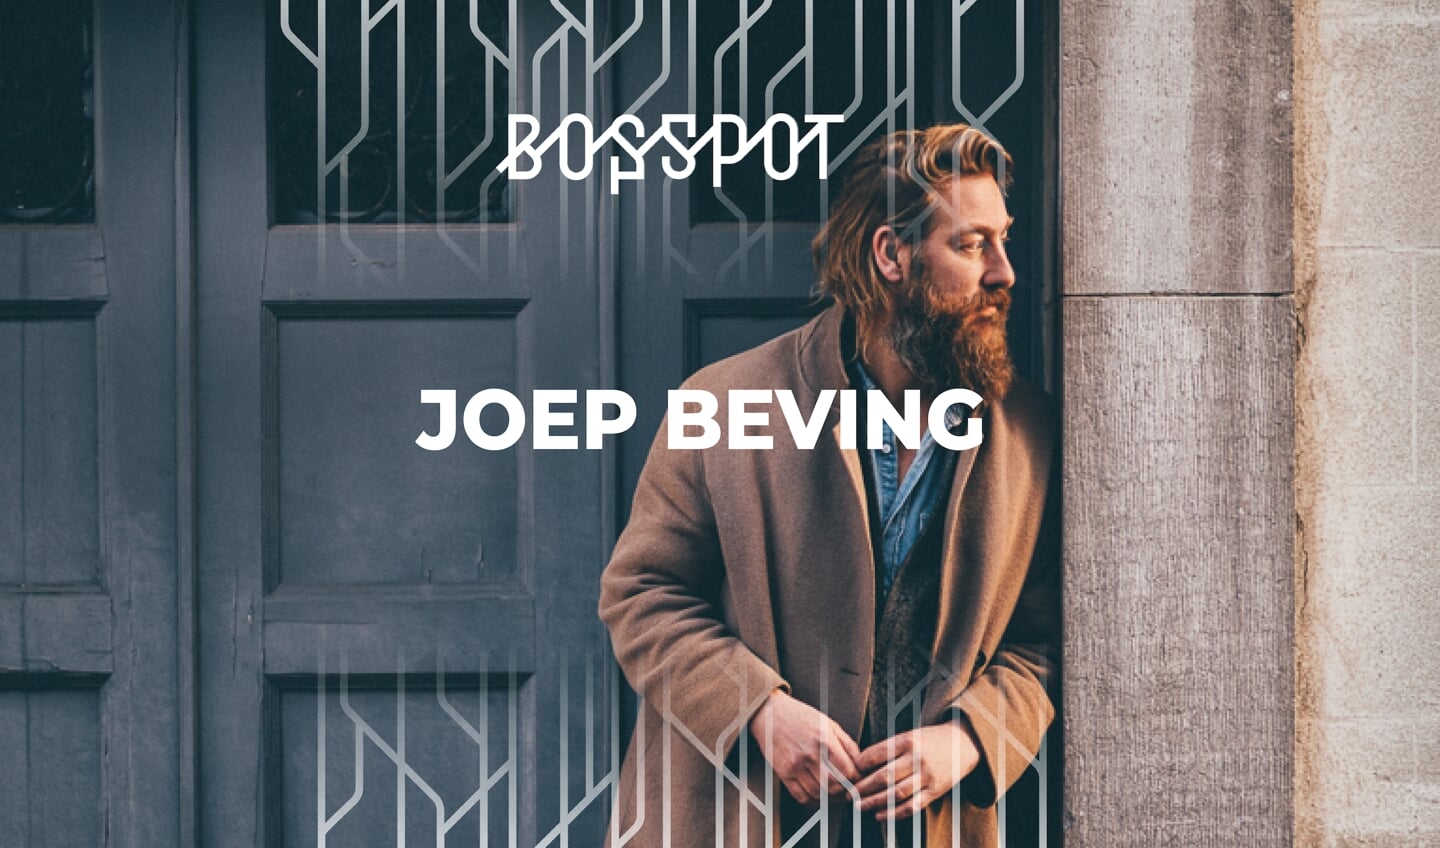 Joep Beving ? Bosspot Amersfoort